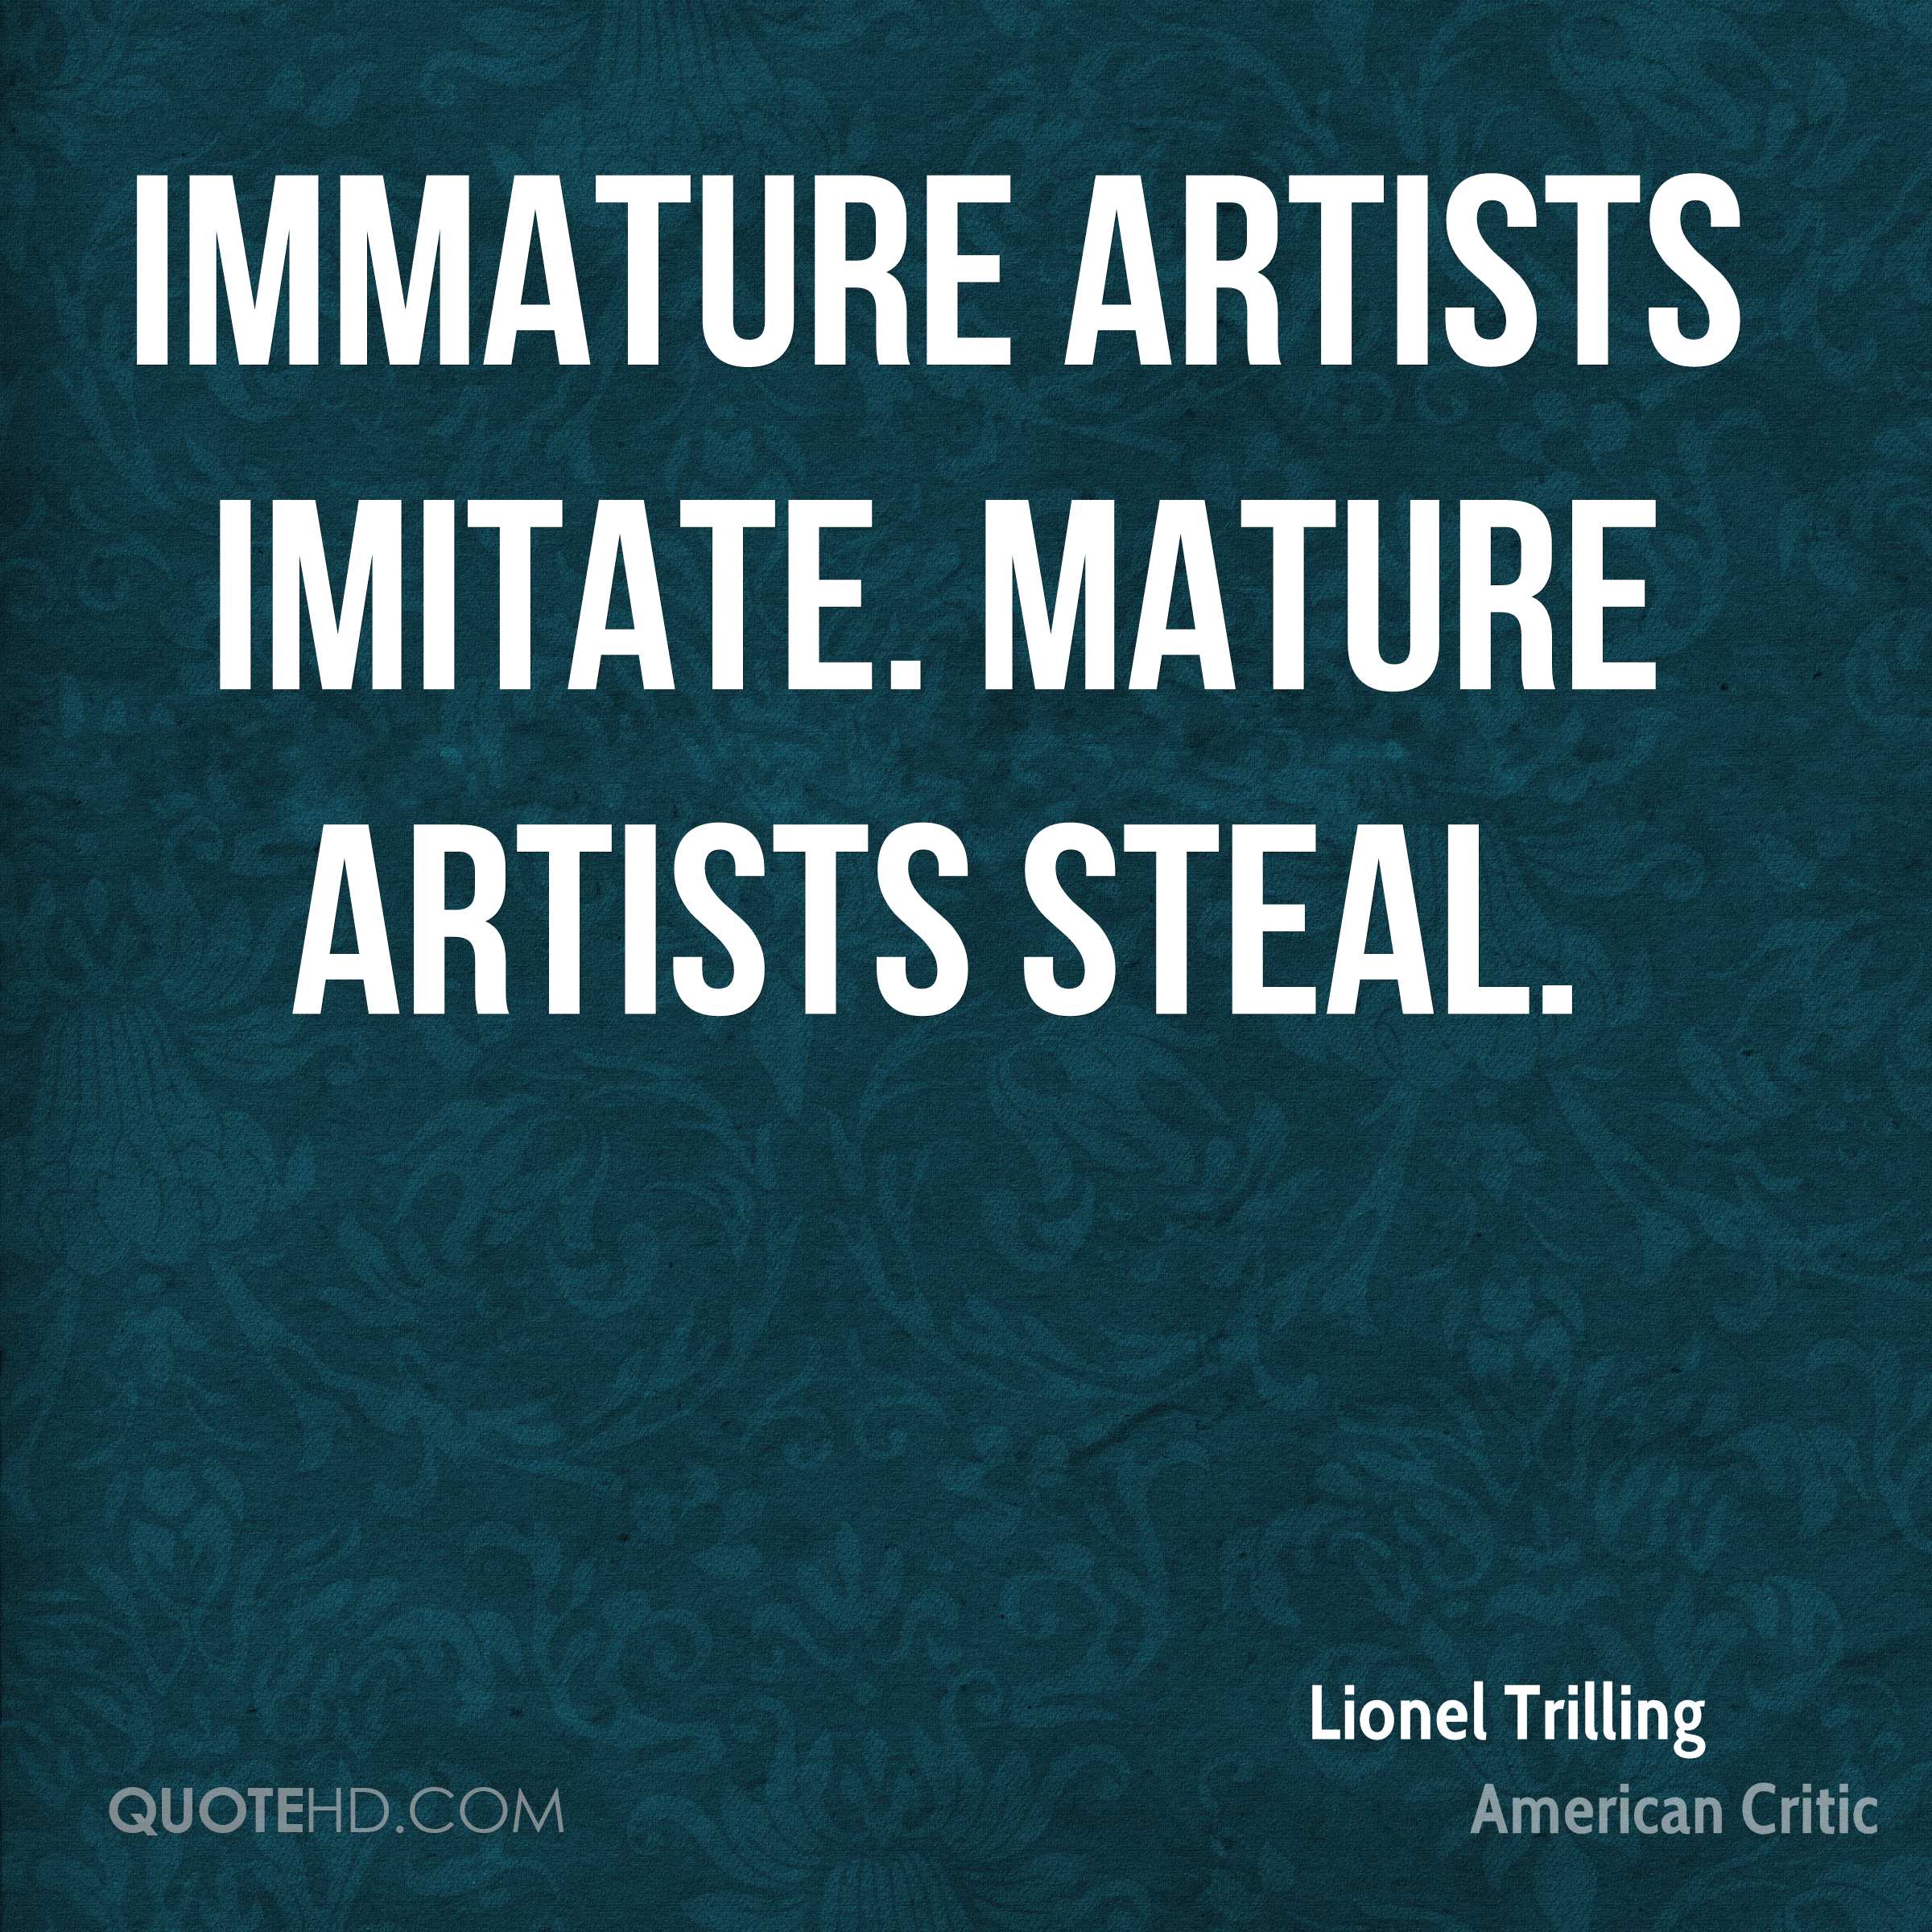 lionel-trilling-art-quotes-immature-artists-imitate-mature-artists.jpg